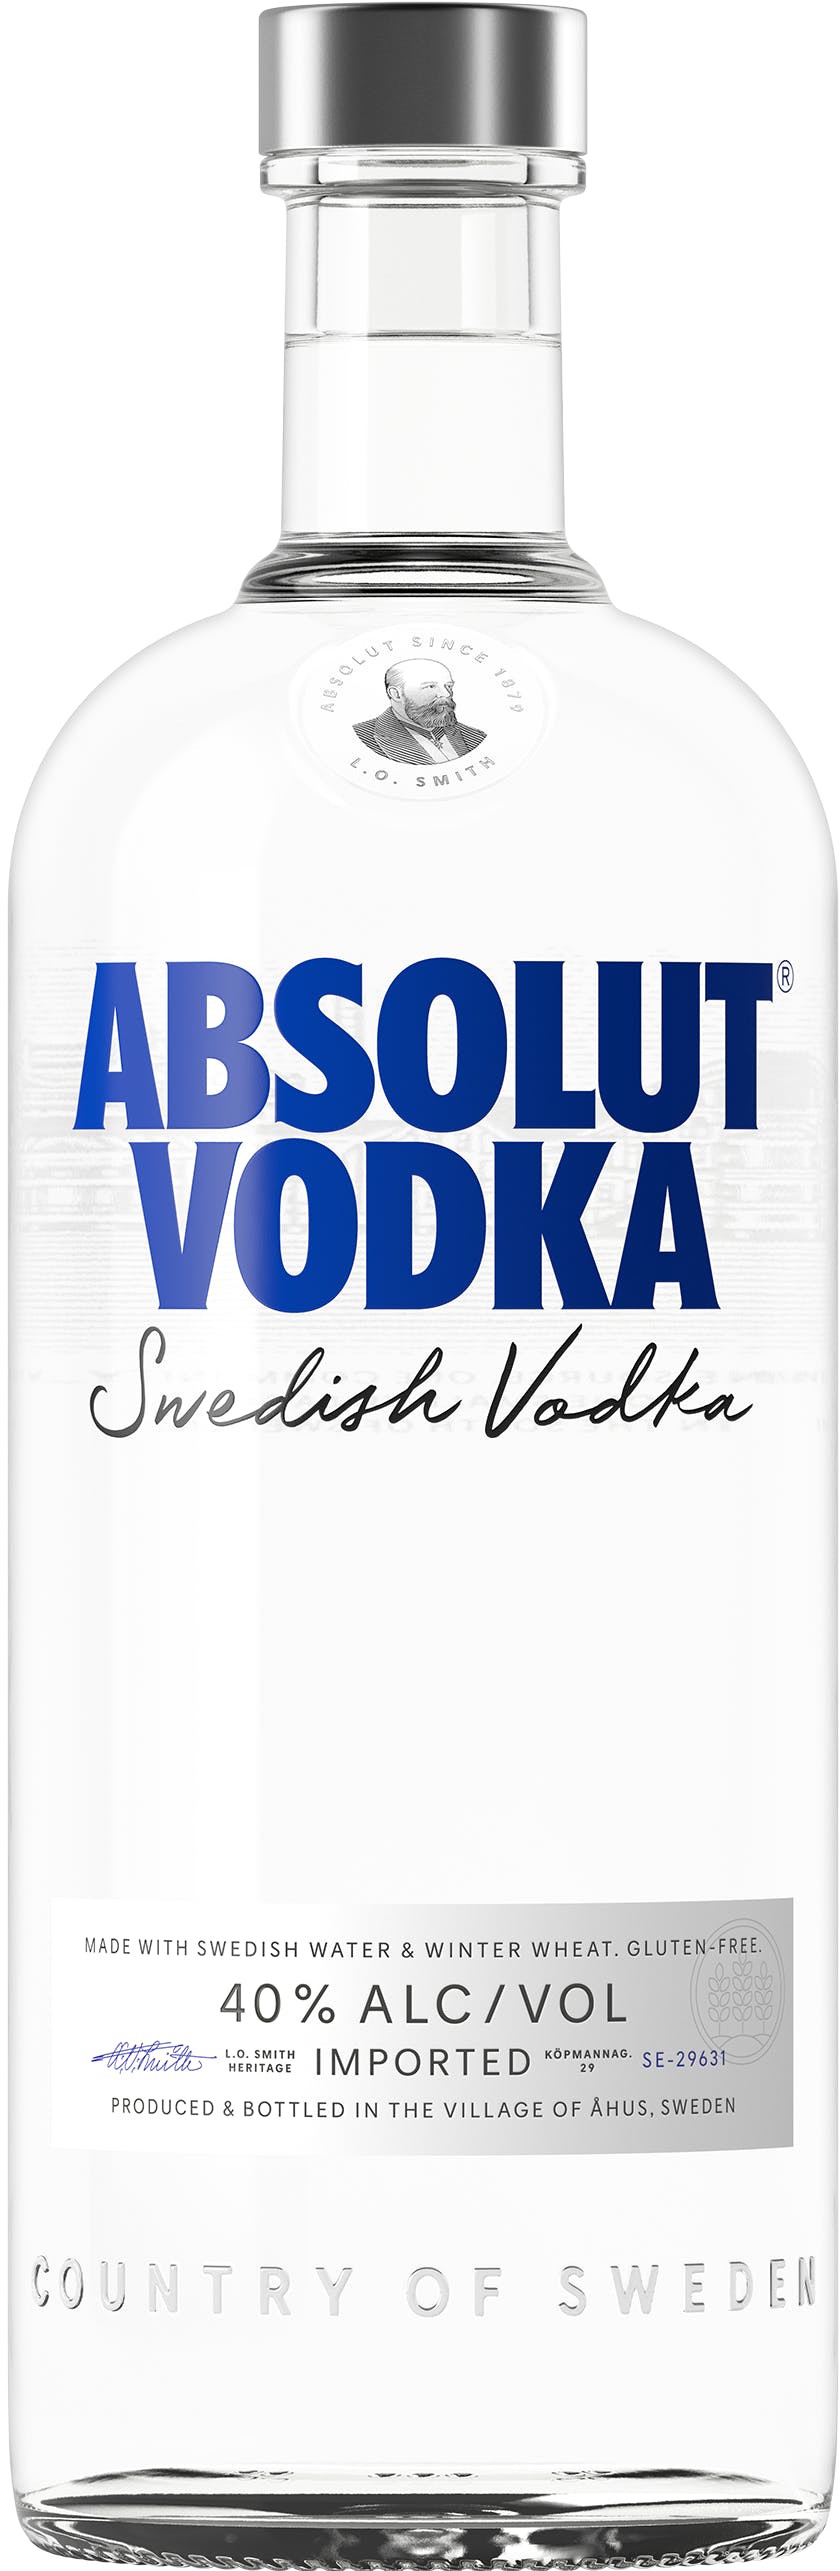 Absolut Vodka 1 l - Buy your spirits online - EU Wide Delivery